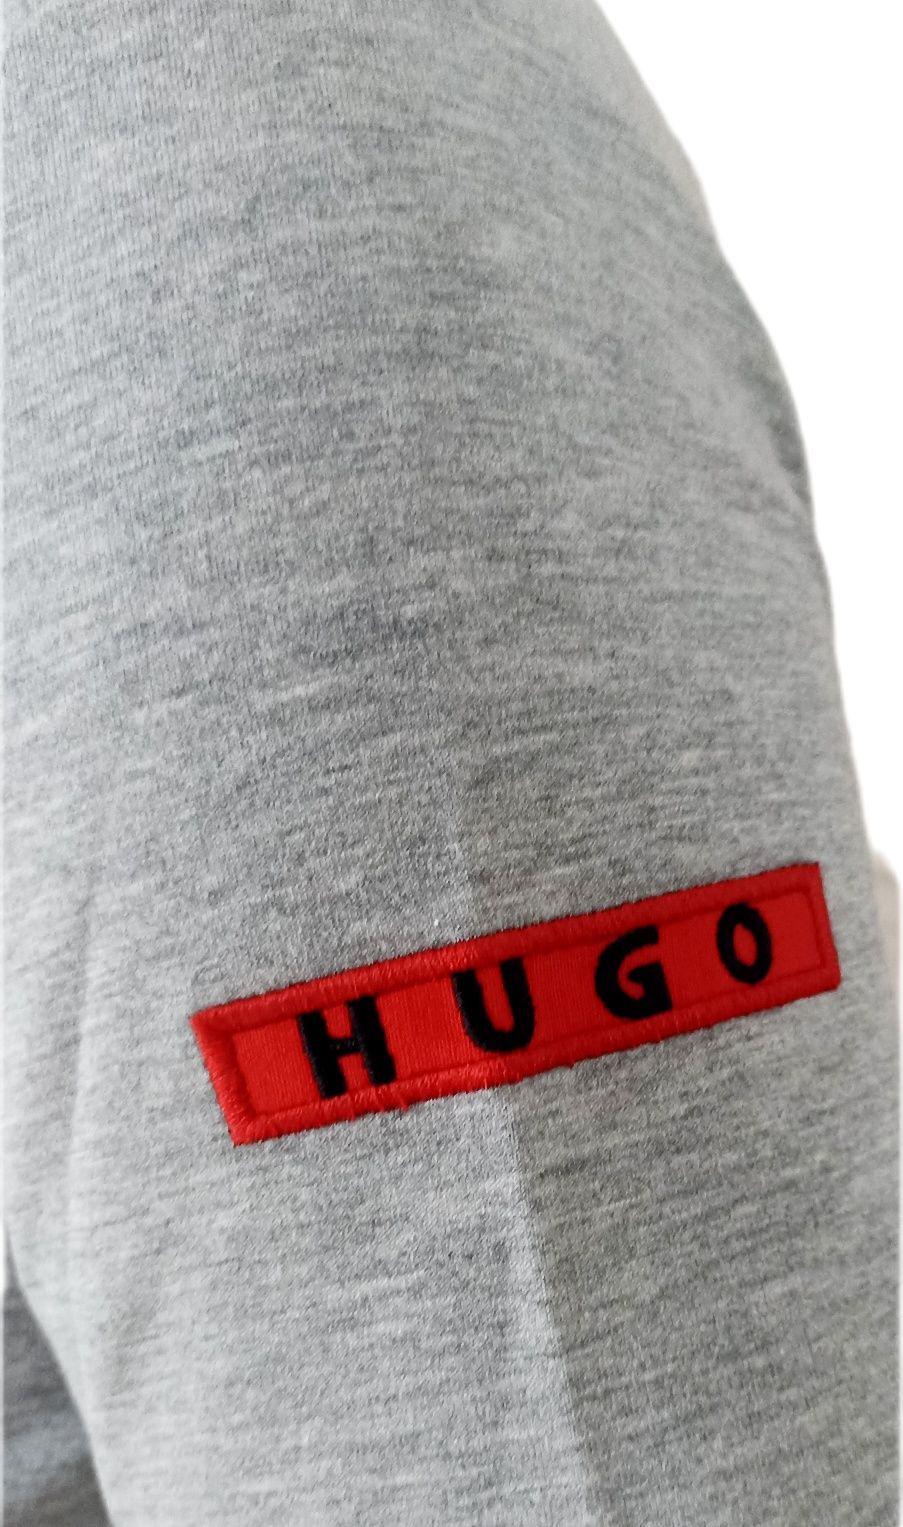 Bluza Hugo Boss r.M,XL,3XL